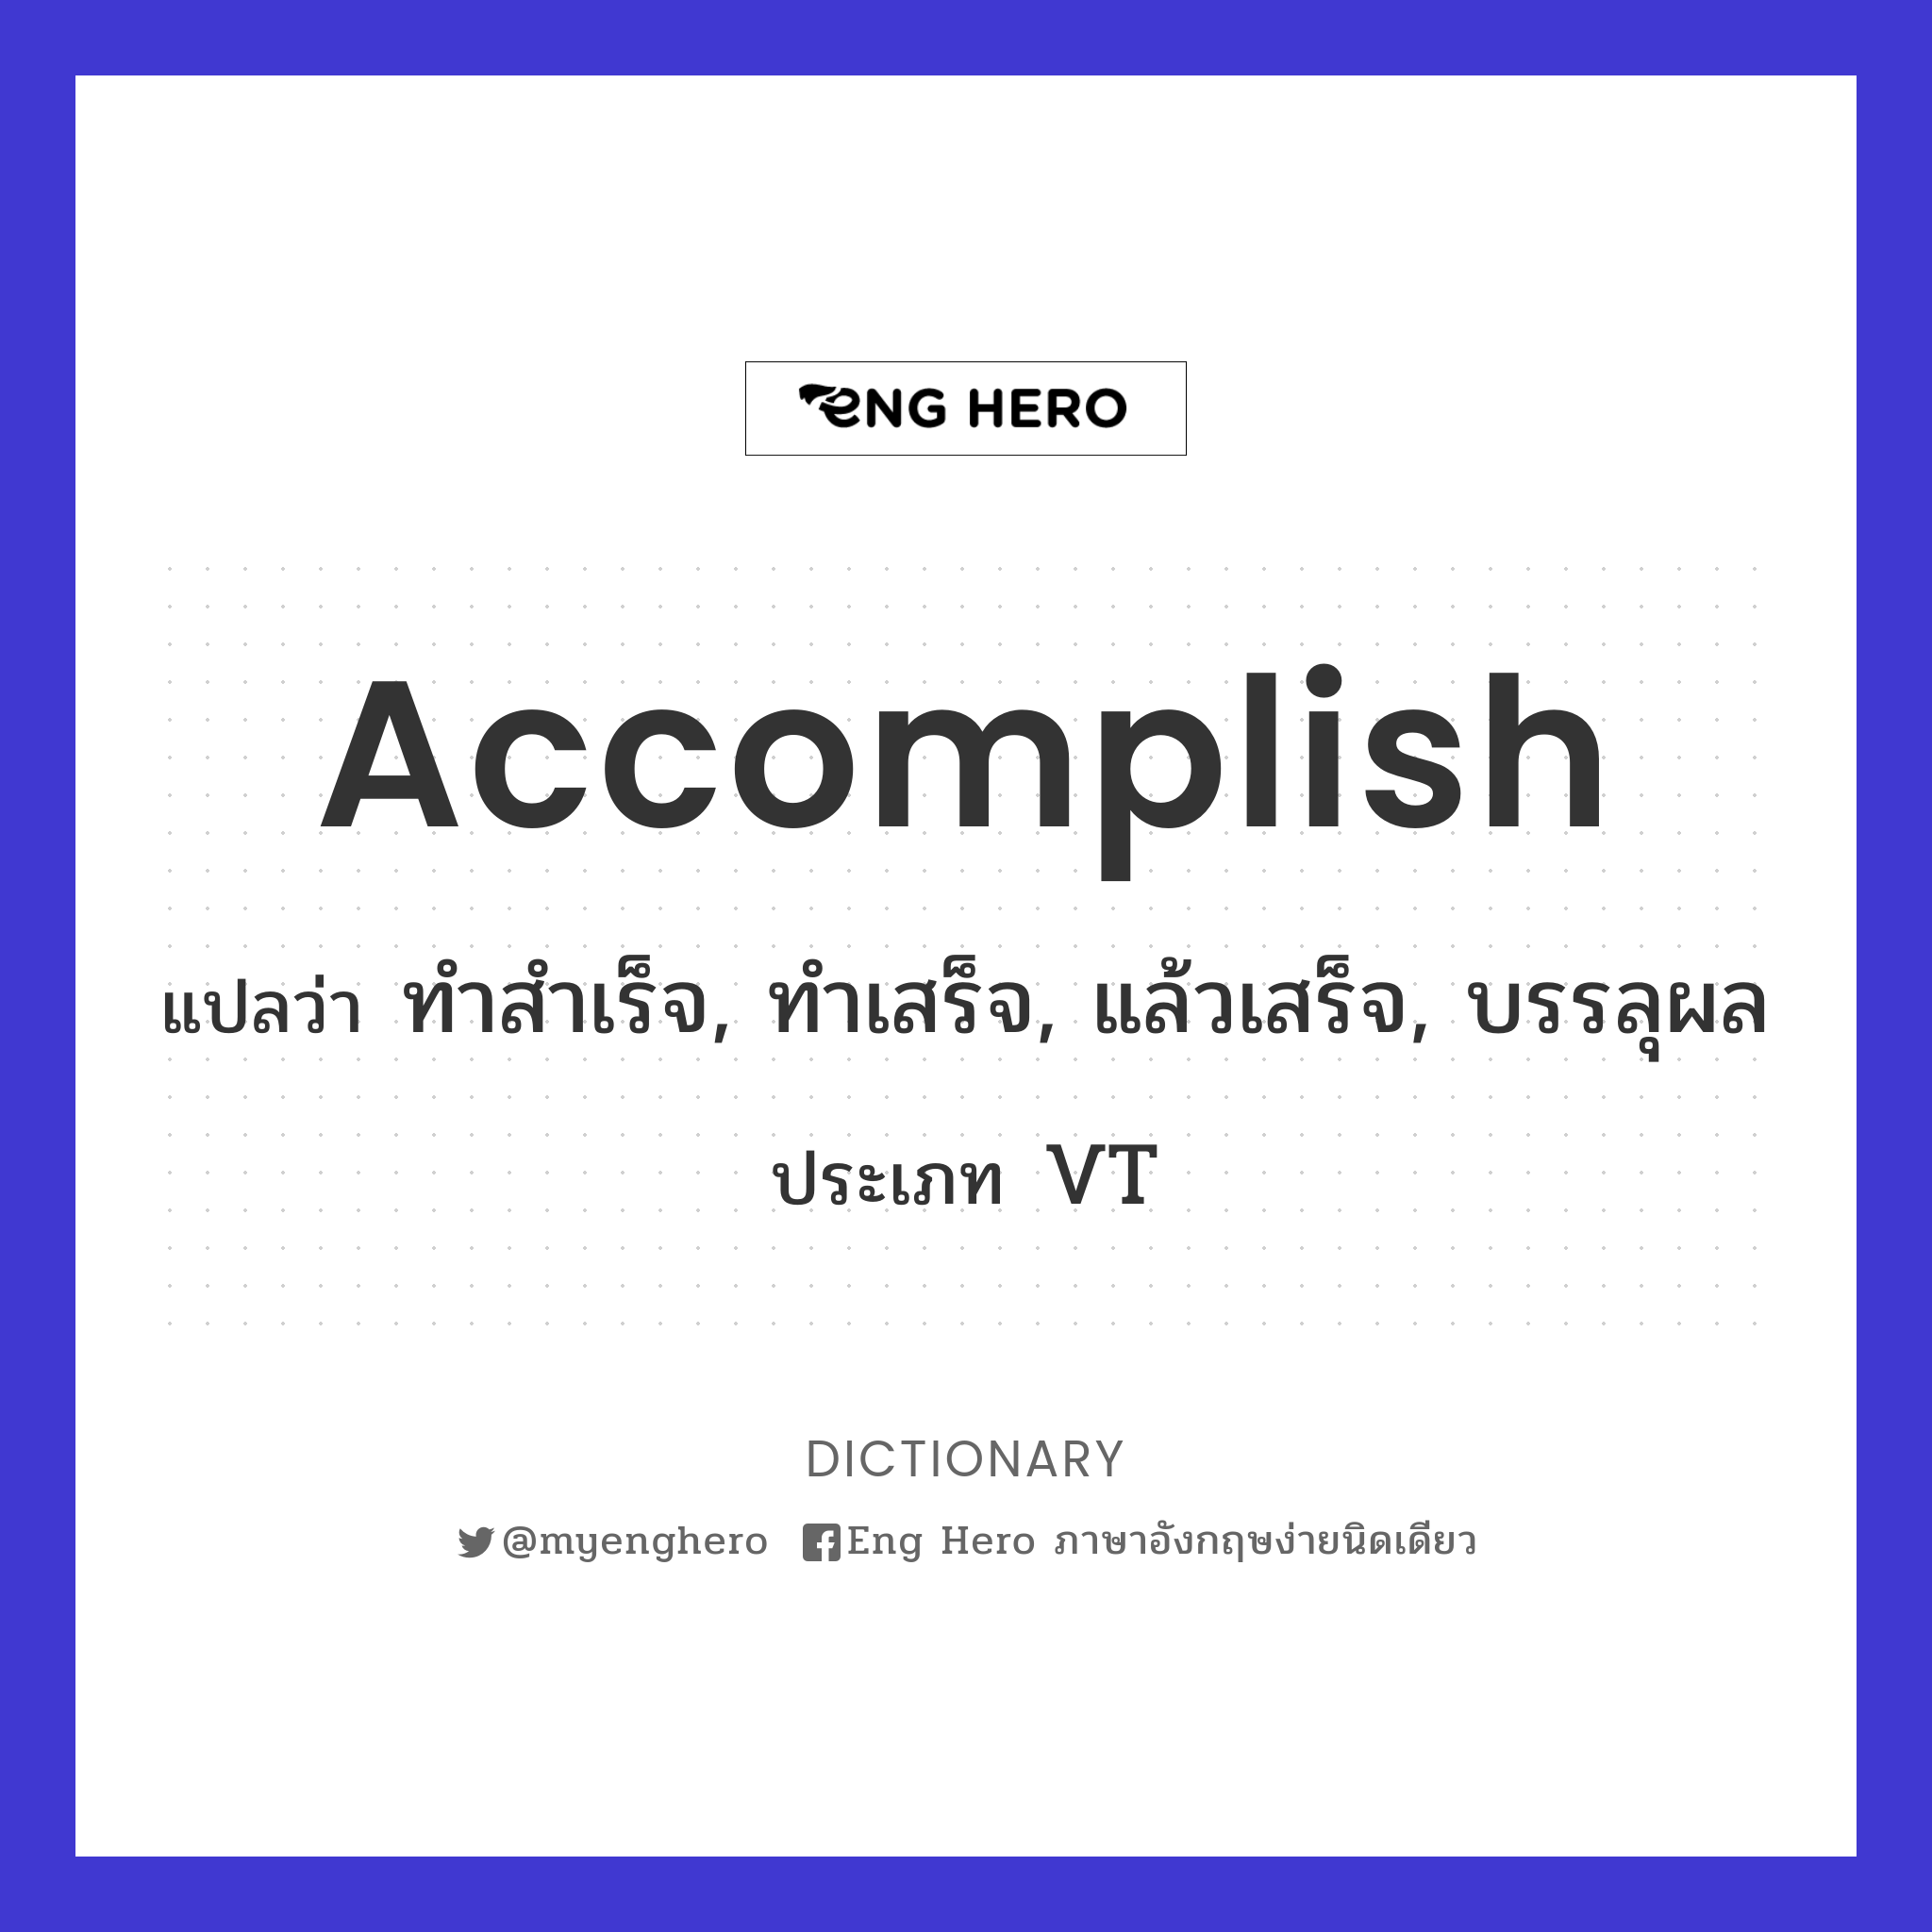 accomplish